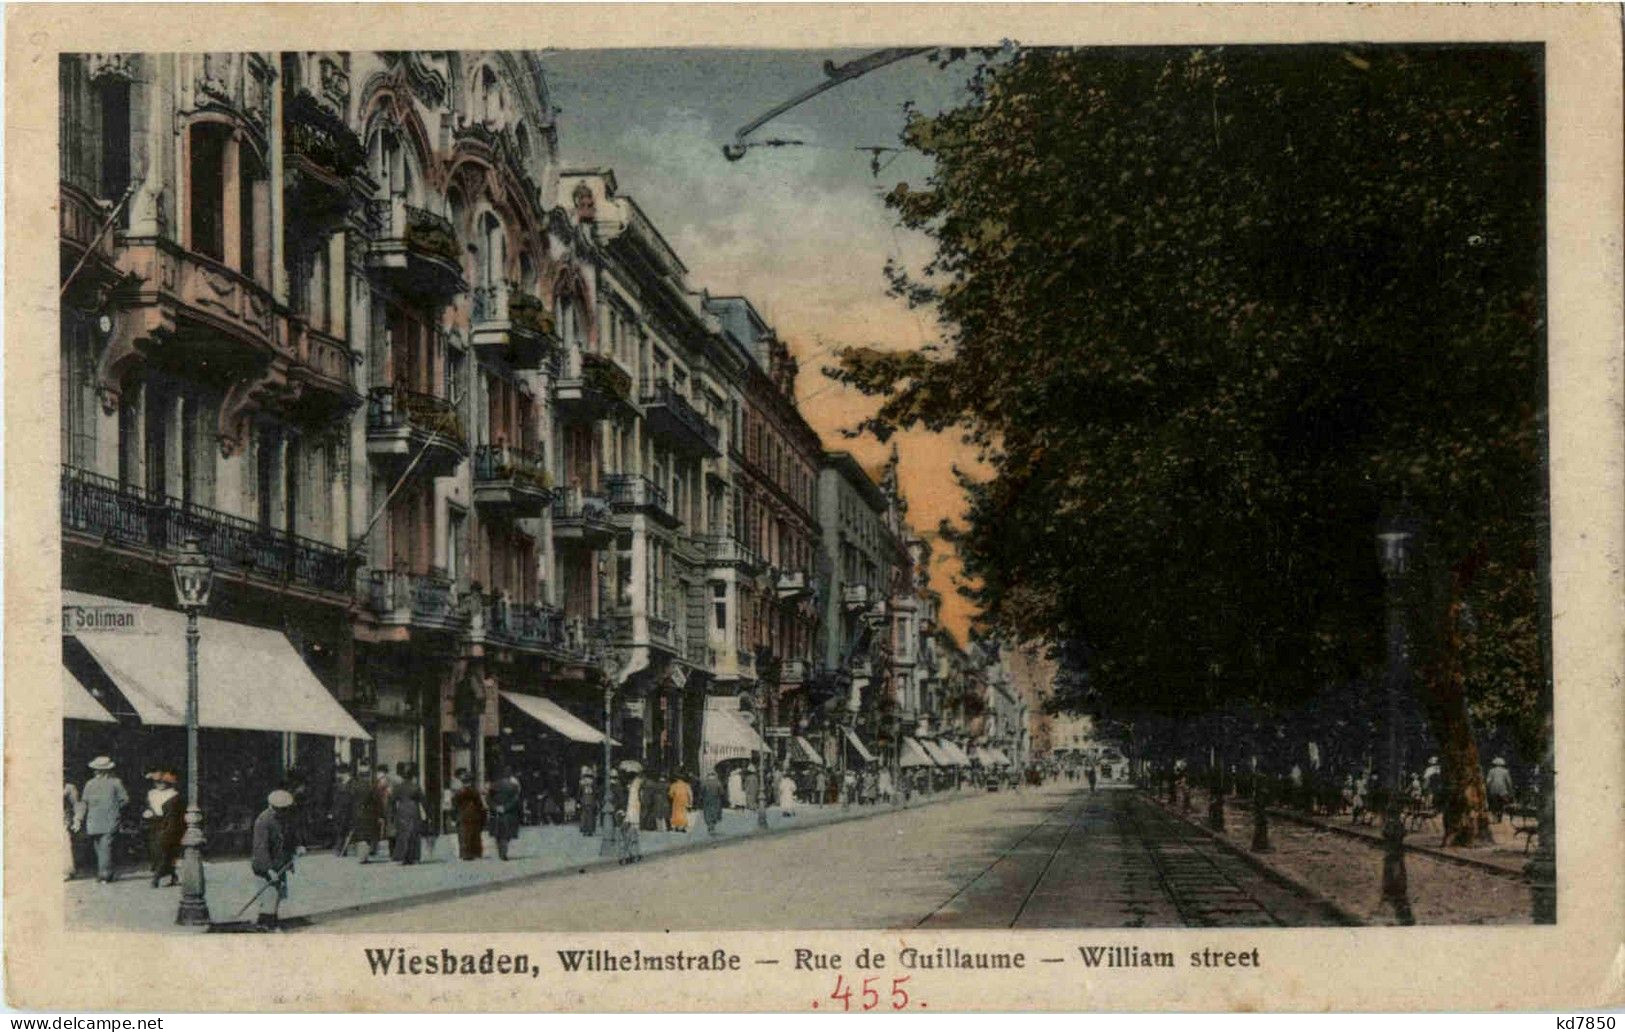 Wiesbaden - Wilhelmstrasse - Wiesbaden